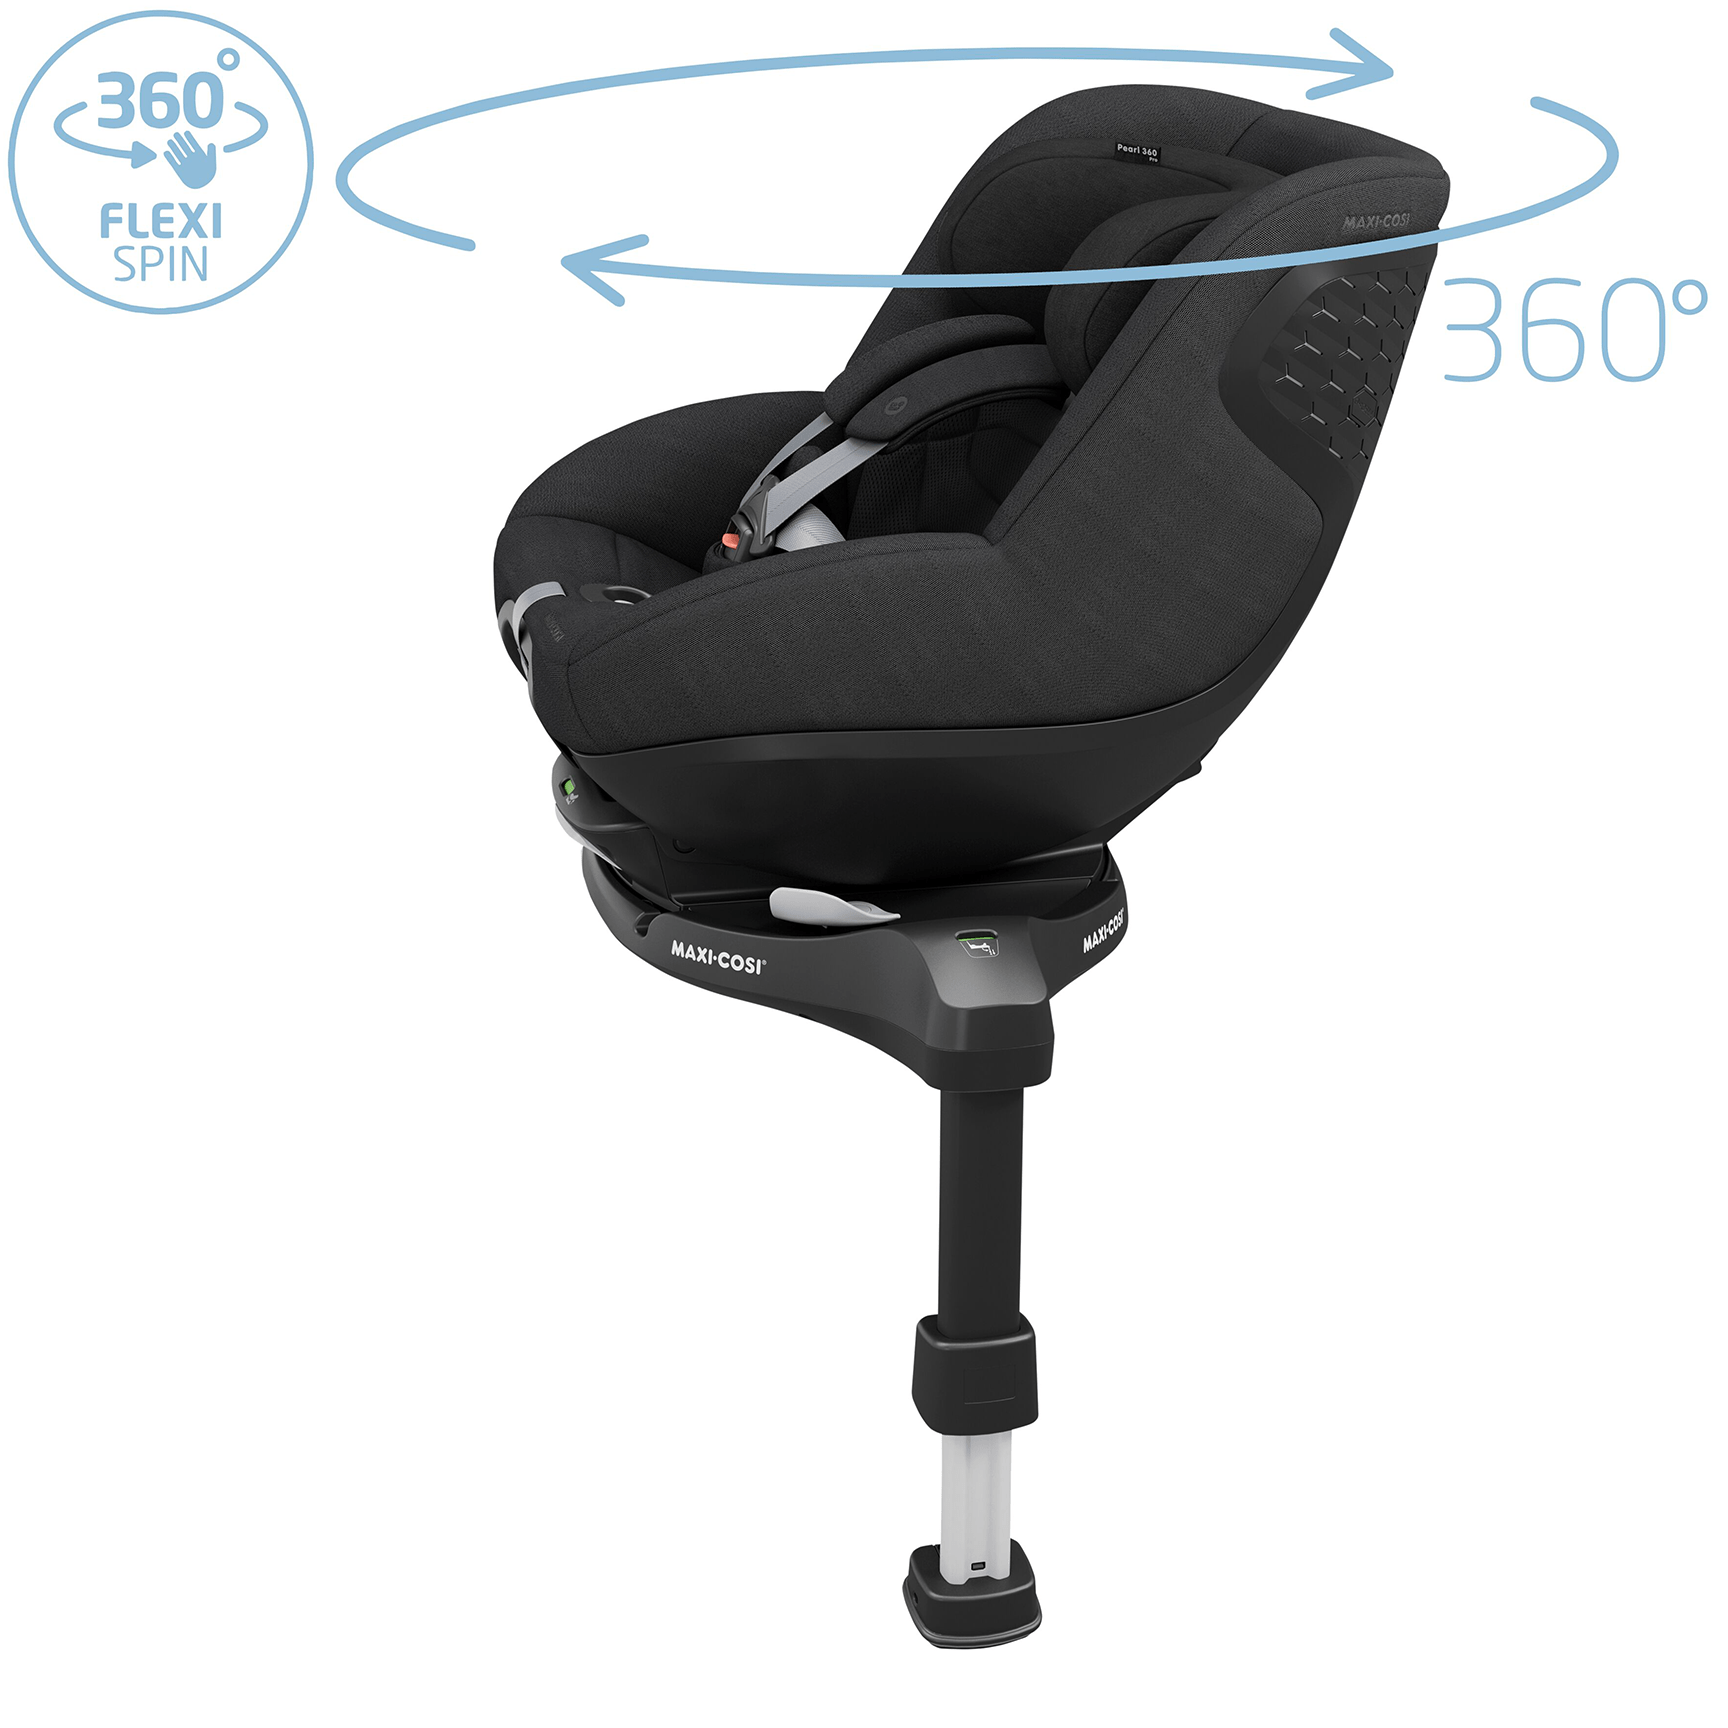 Maxi-Cosi baby car seats Maxi-Cosi 360 Family Pro Bundle - Essential Black KF54400000